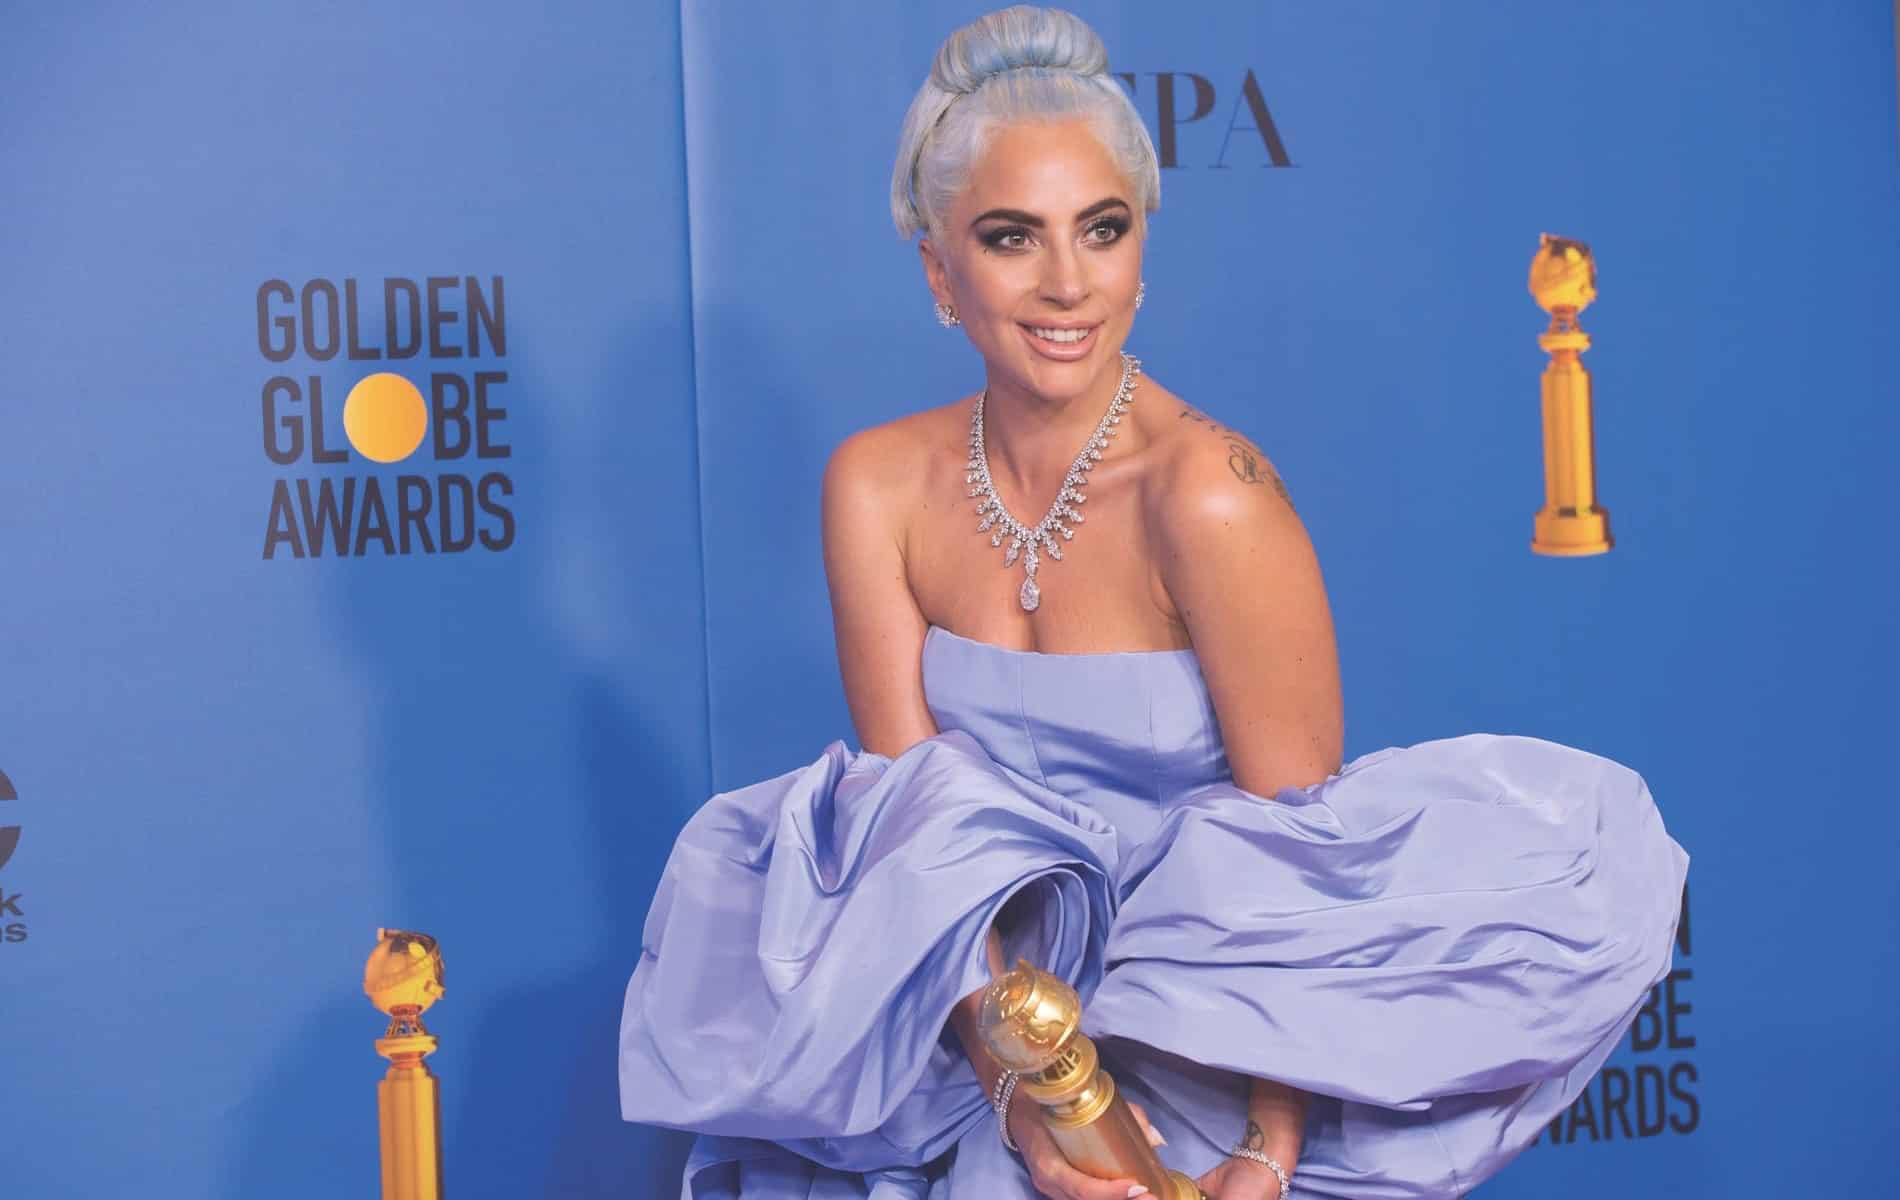 76th Golden Globe Awards, Beverly Hilton, Beverly Hills, Hollywood Foreign Press Association, red carpet, award season, Golden Globes, Lady Gaga, A Star is Born